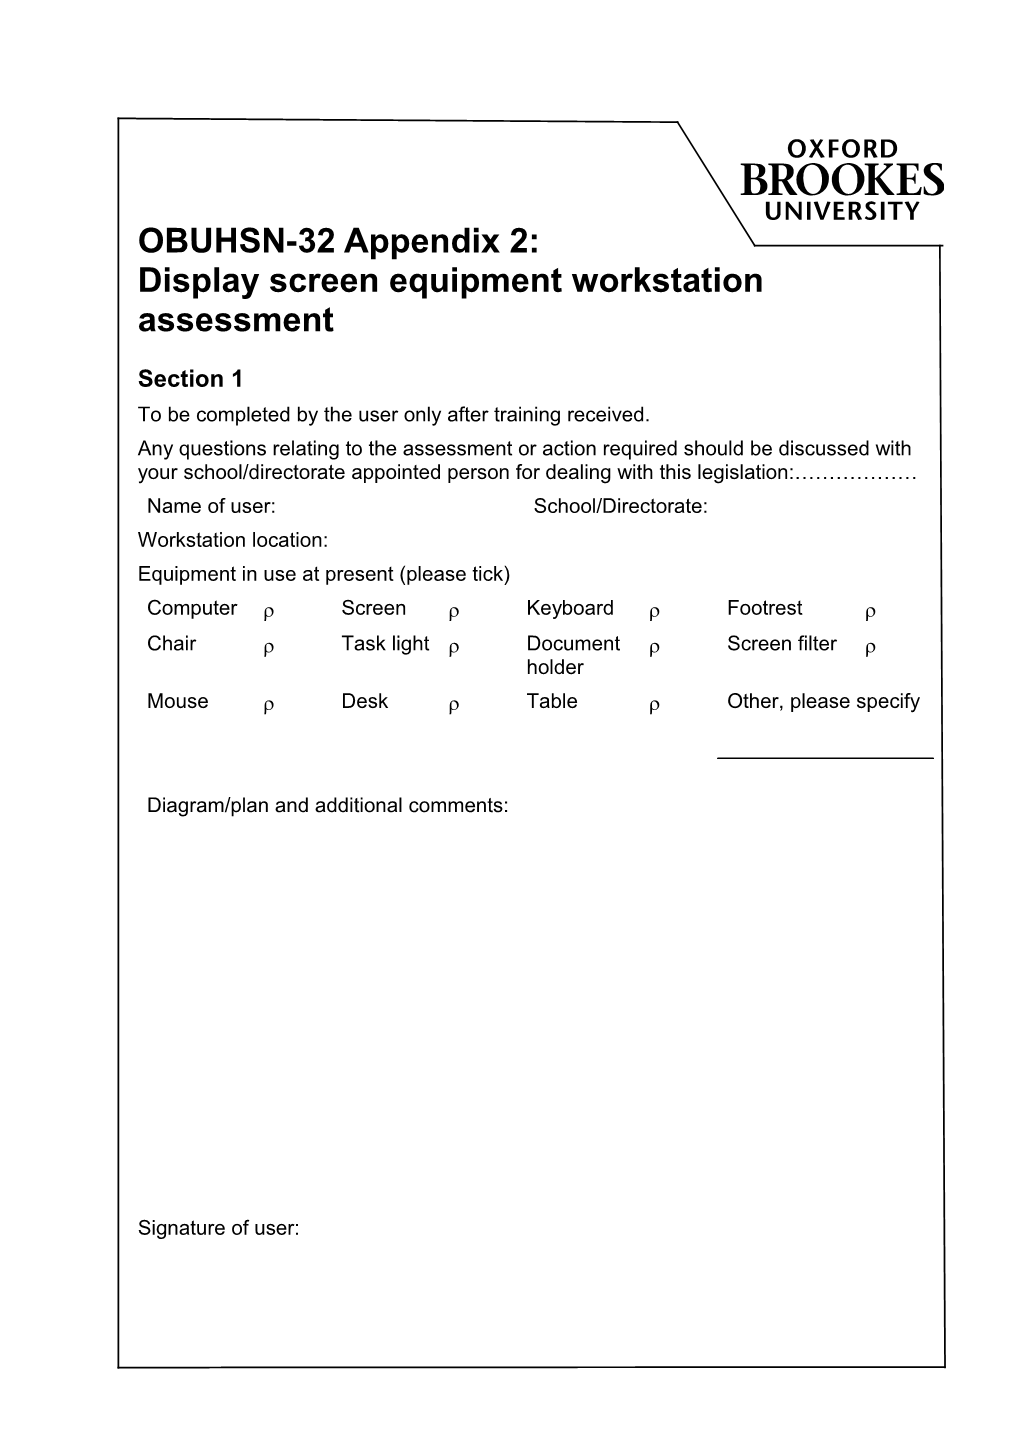 OBUHSN-32 Appendix 2: Display Screen Equipment Workstation Assessment